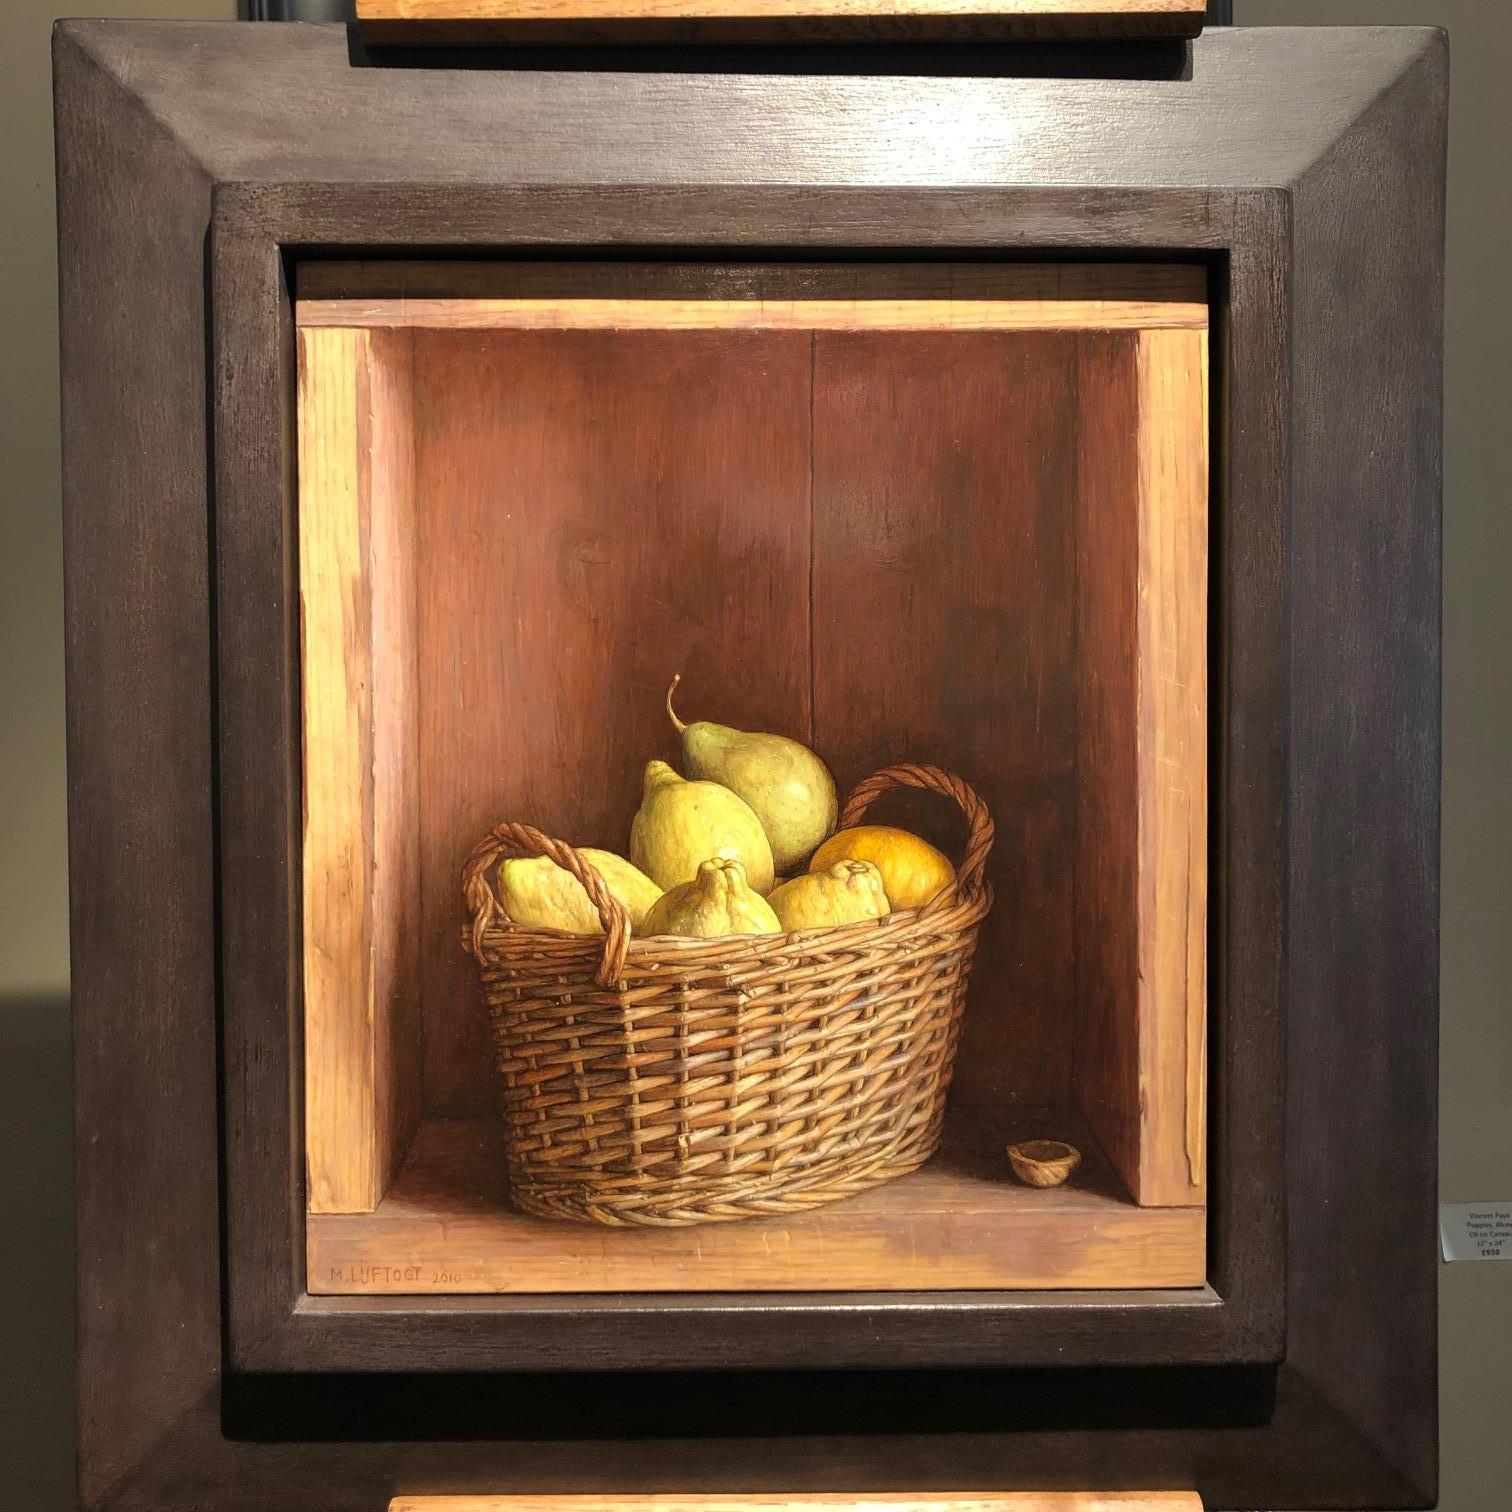 Contemporary Still Life in a cabinet 'Basket of Lemons' by Mark Lijftogt 1